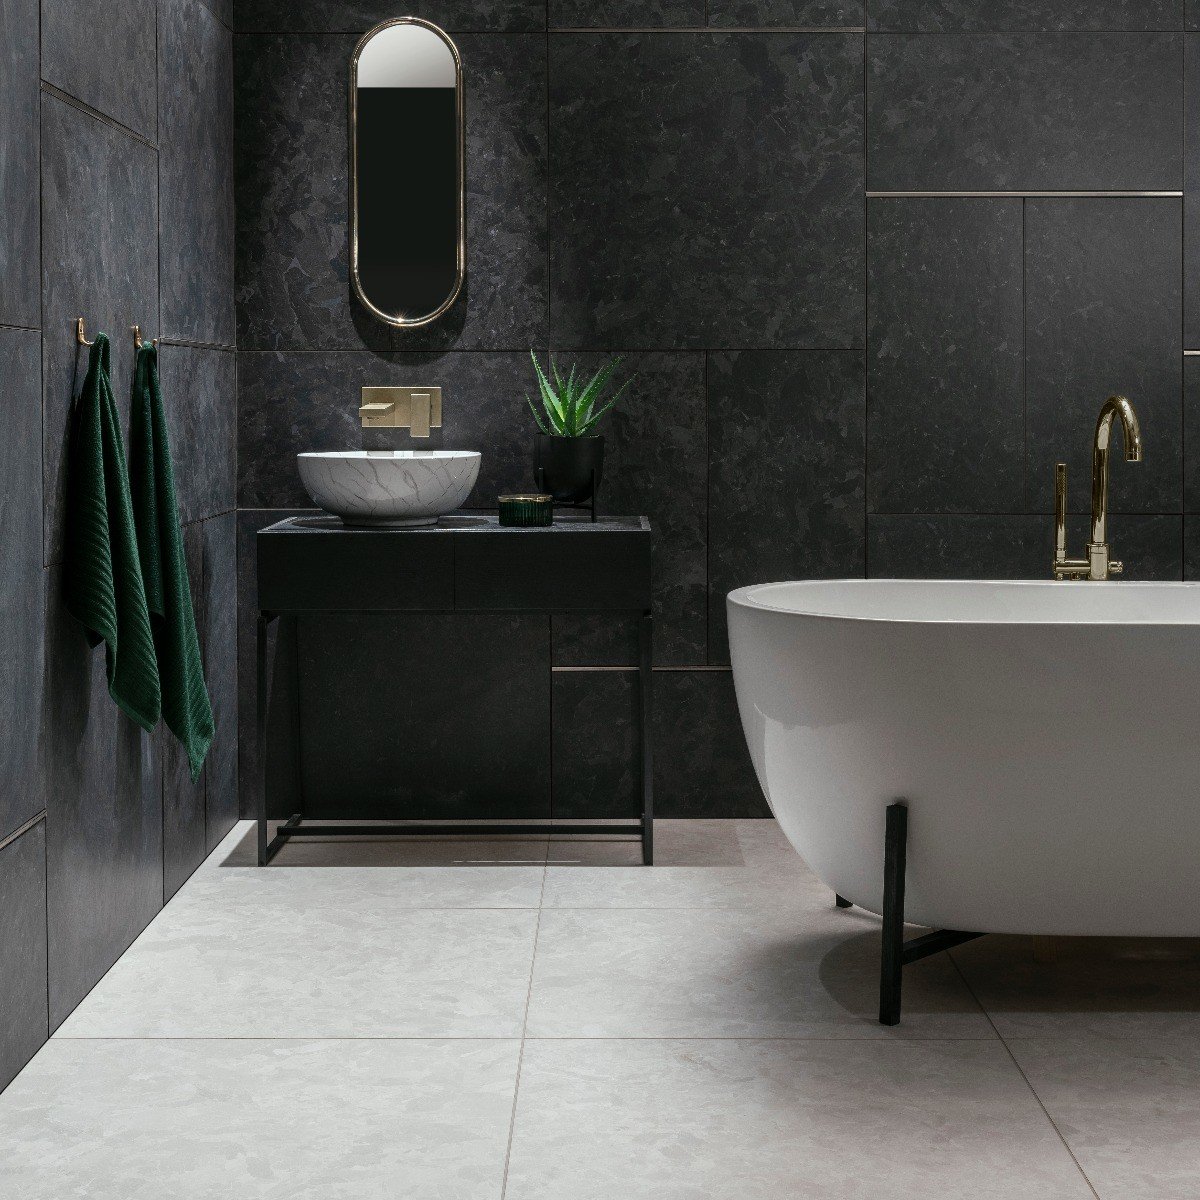 Solo Topps Tiles, Black Bathroom Tiles